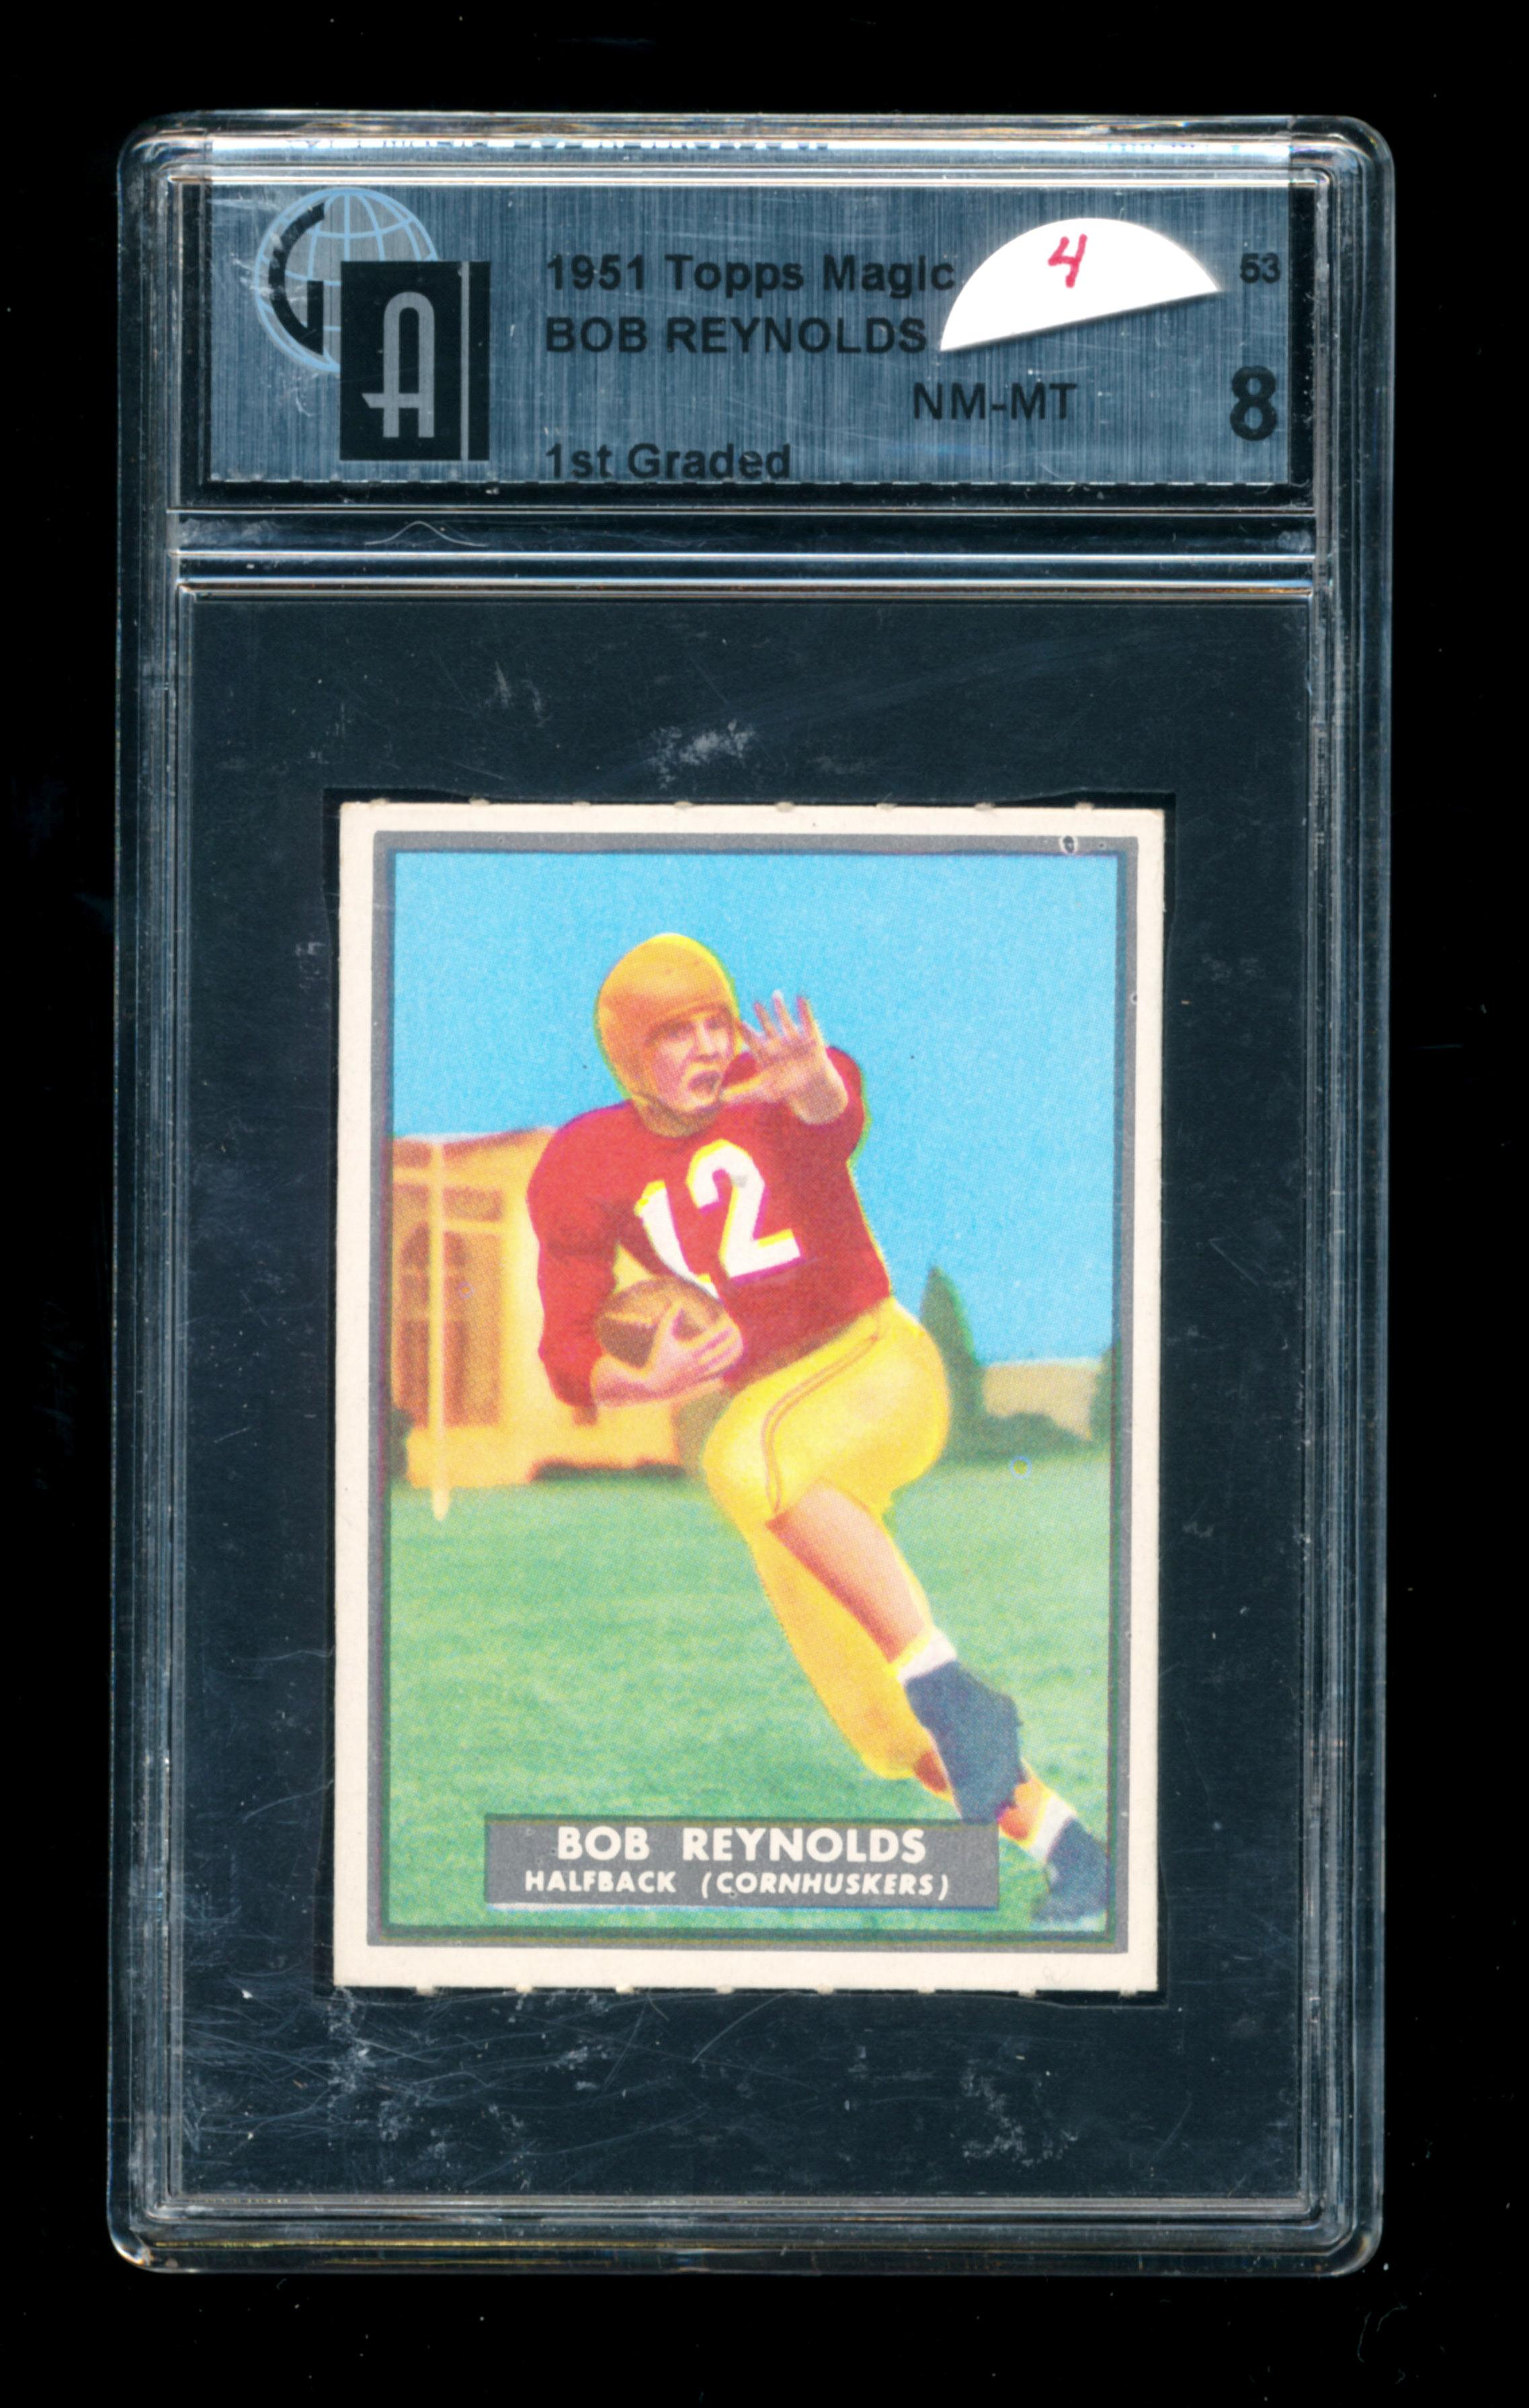 1951 Topps Magic Football Card #53 Bob Reynolds Nebraska Cornhuskers. Certi